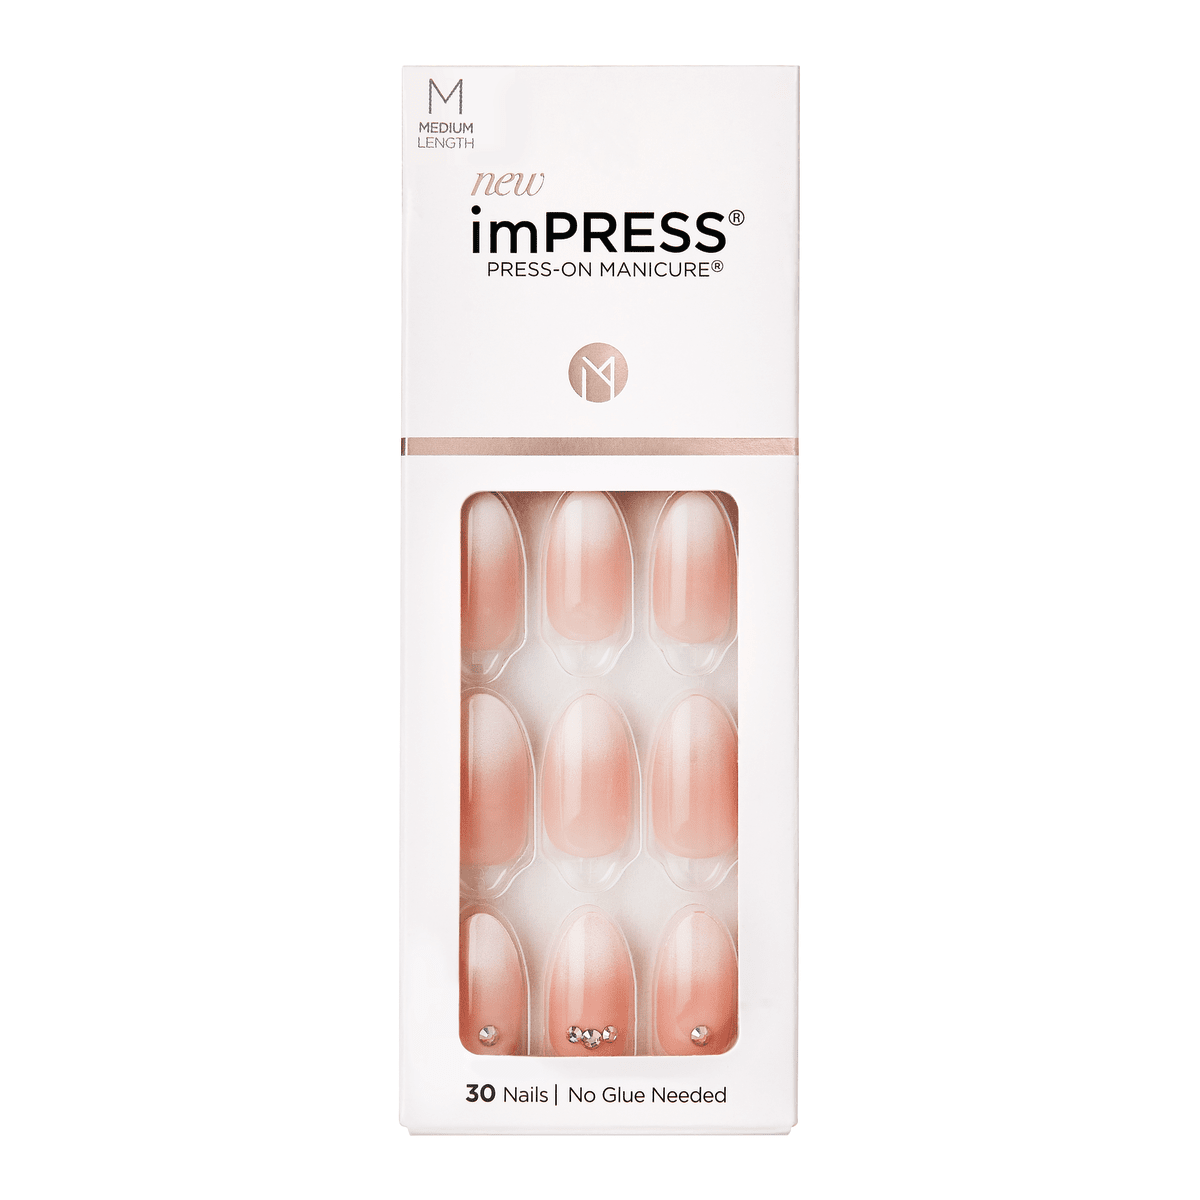 imPRESS Press-On Manicure - Awestruck